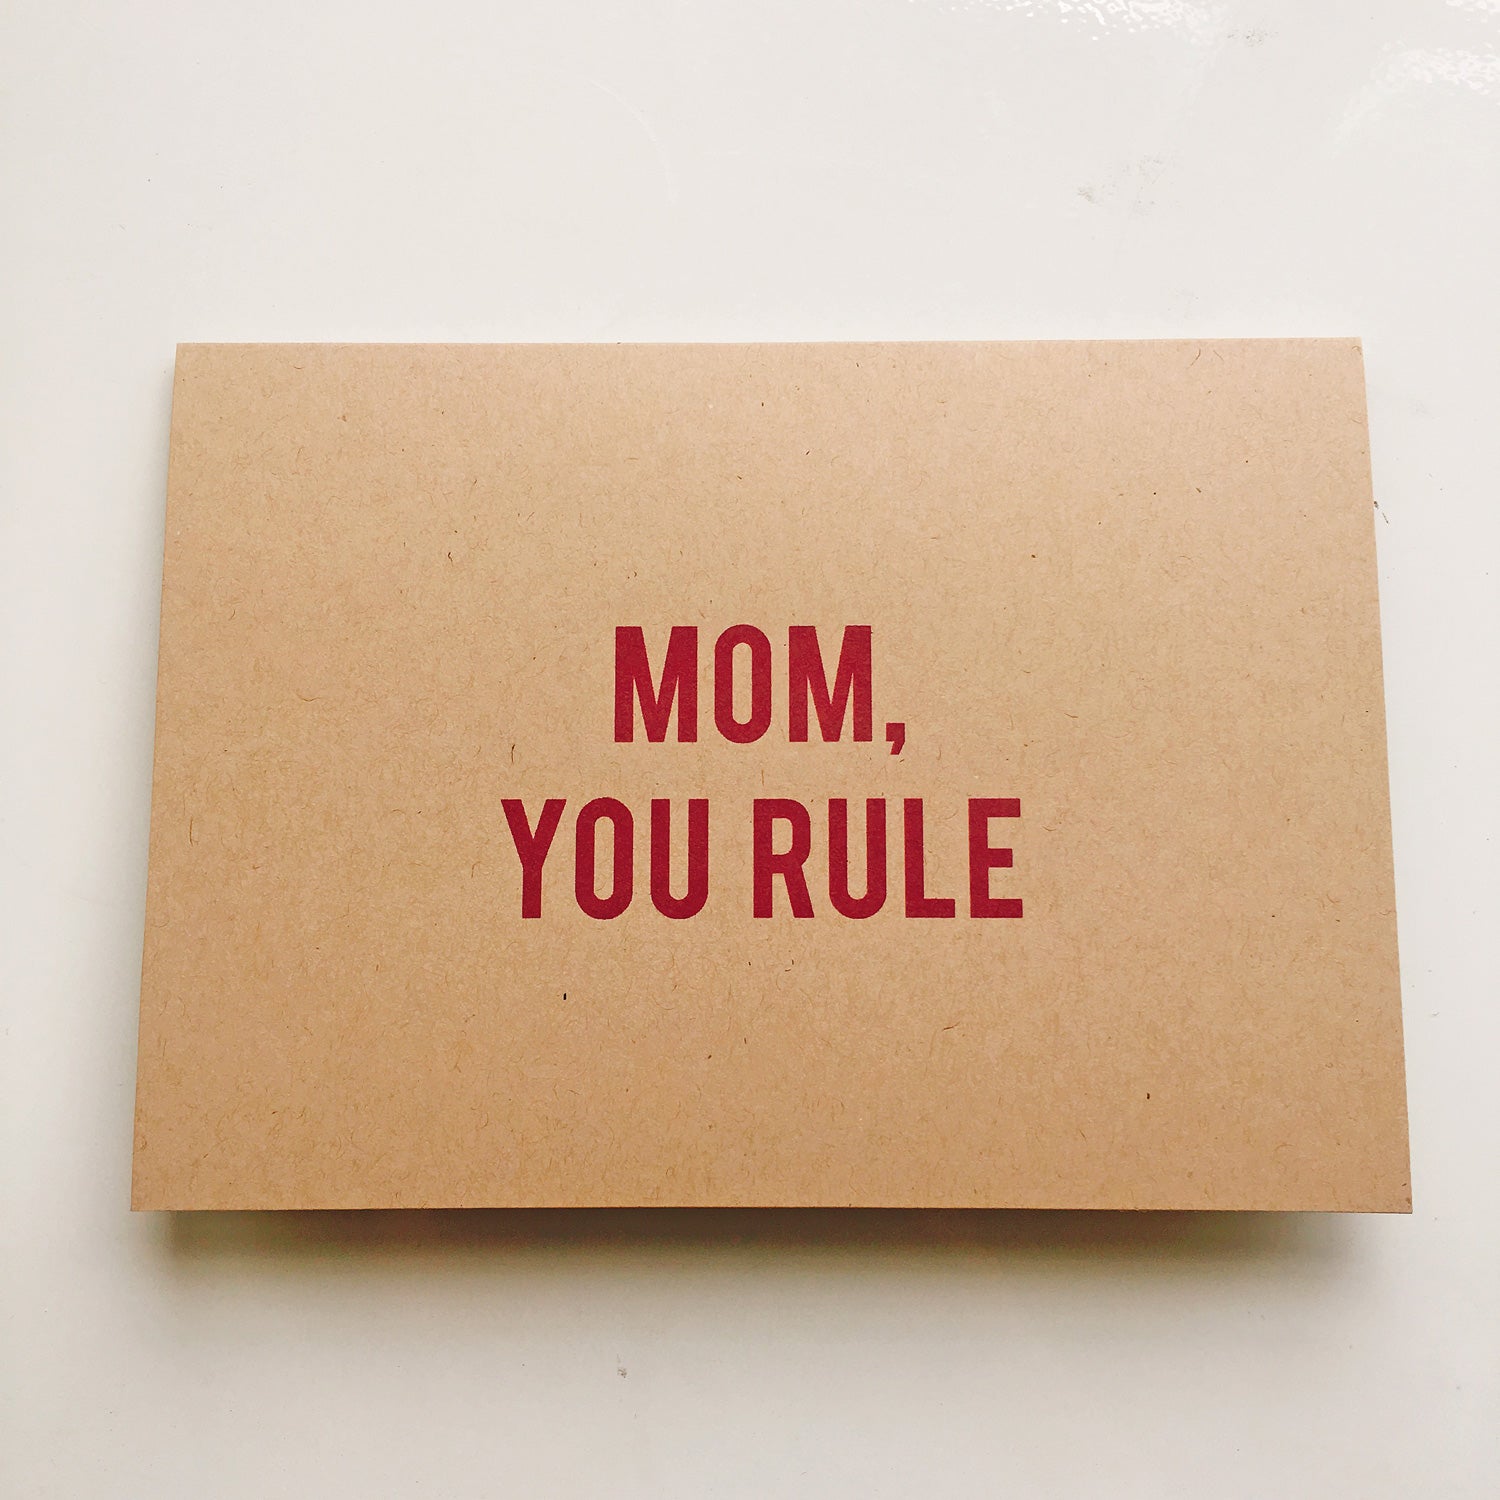 Mom, You Rule - Greeting Card